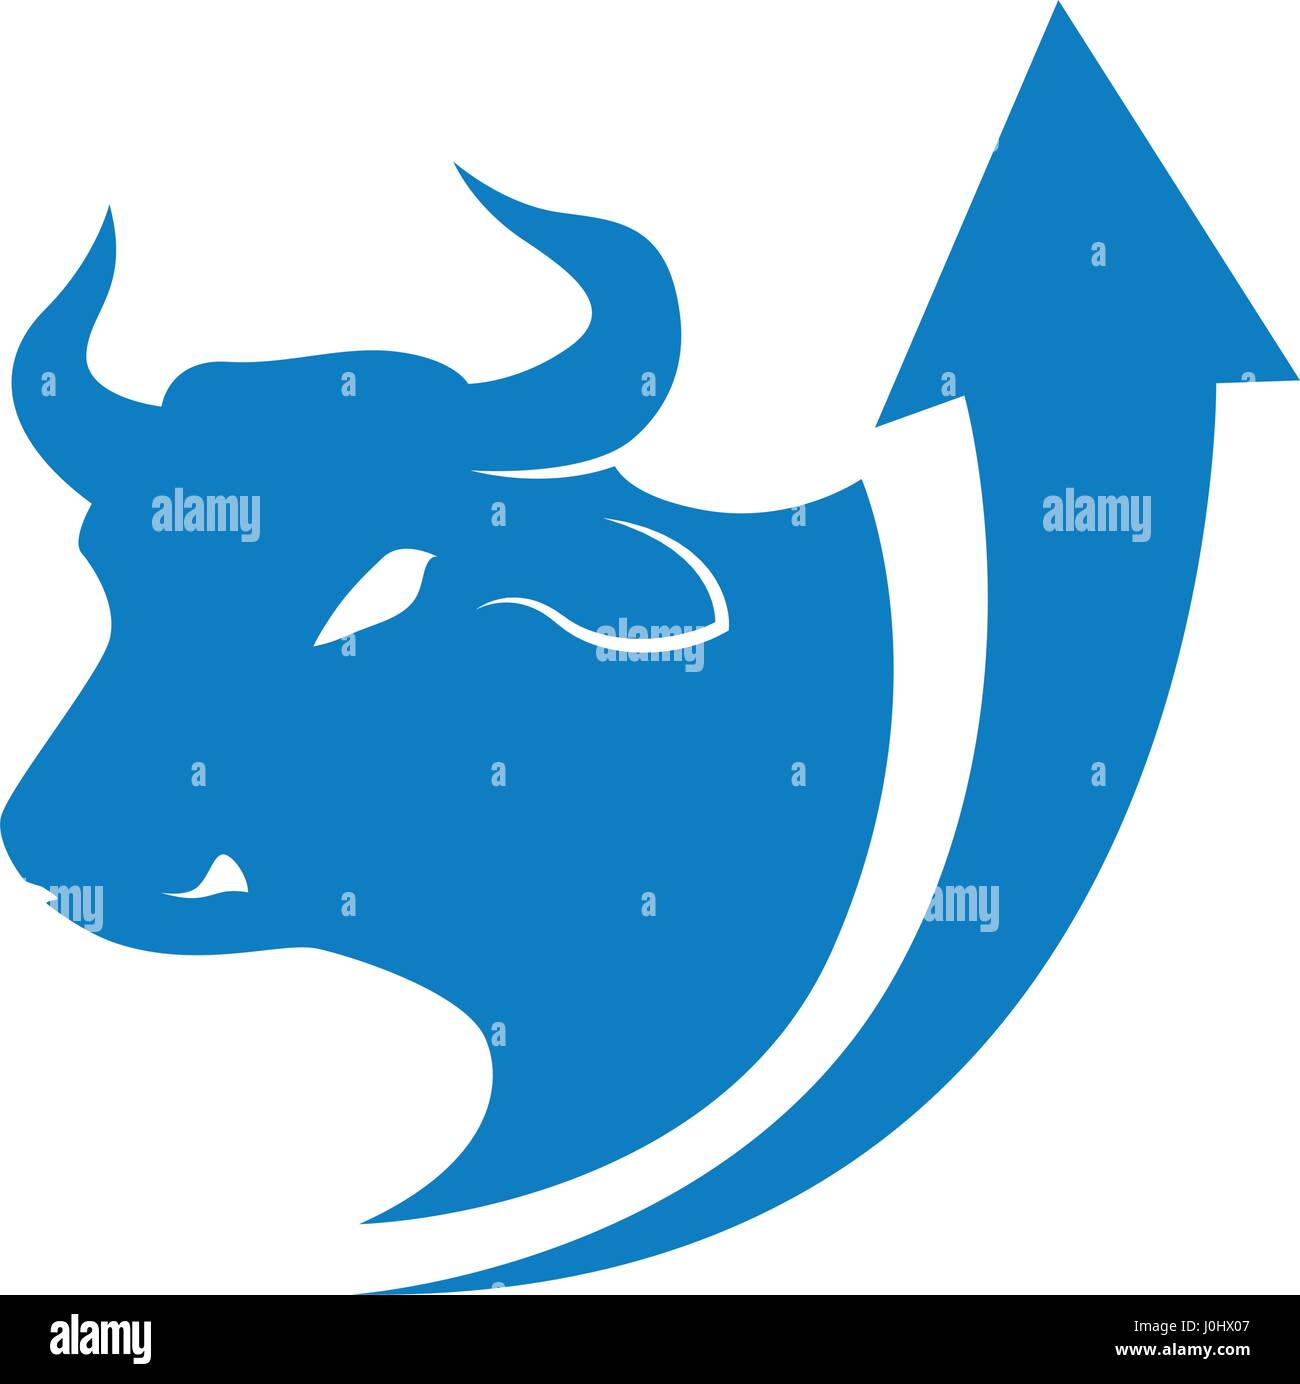 Stock market bull symbol Stock Vector